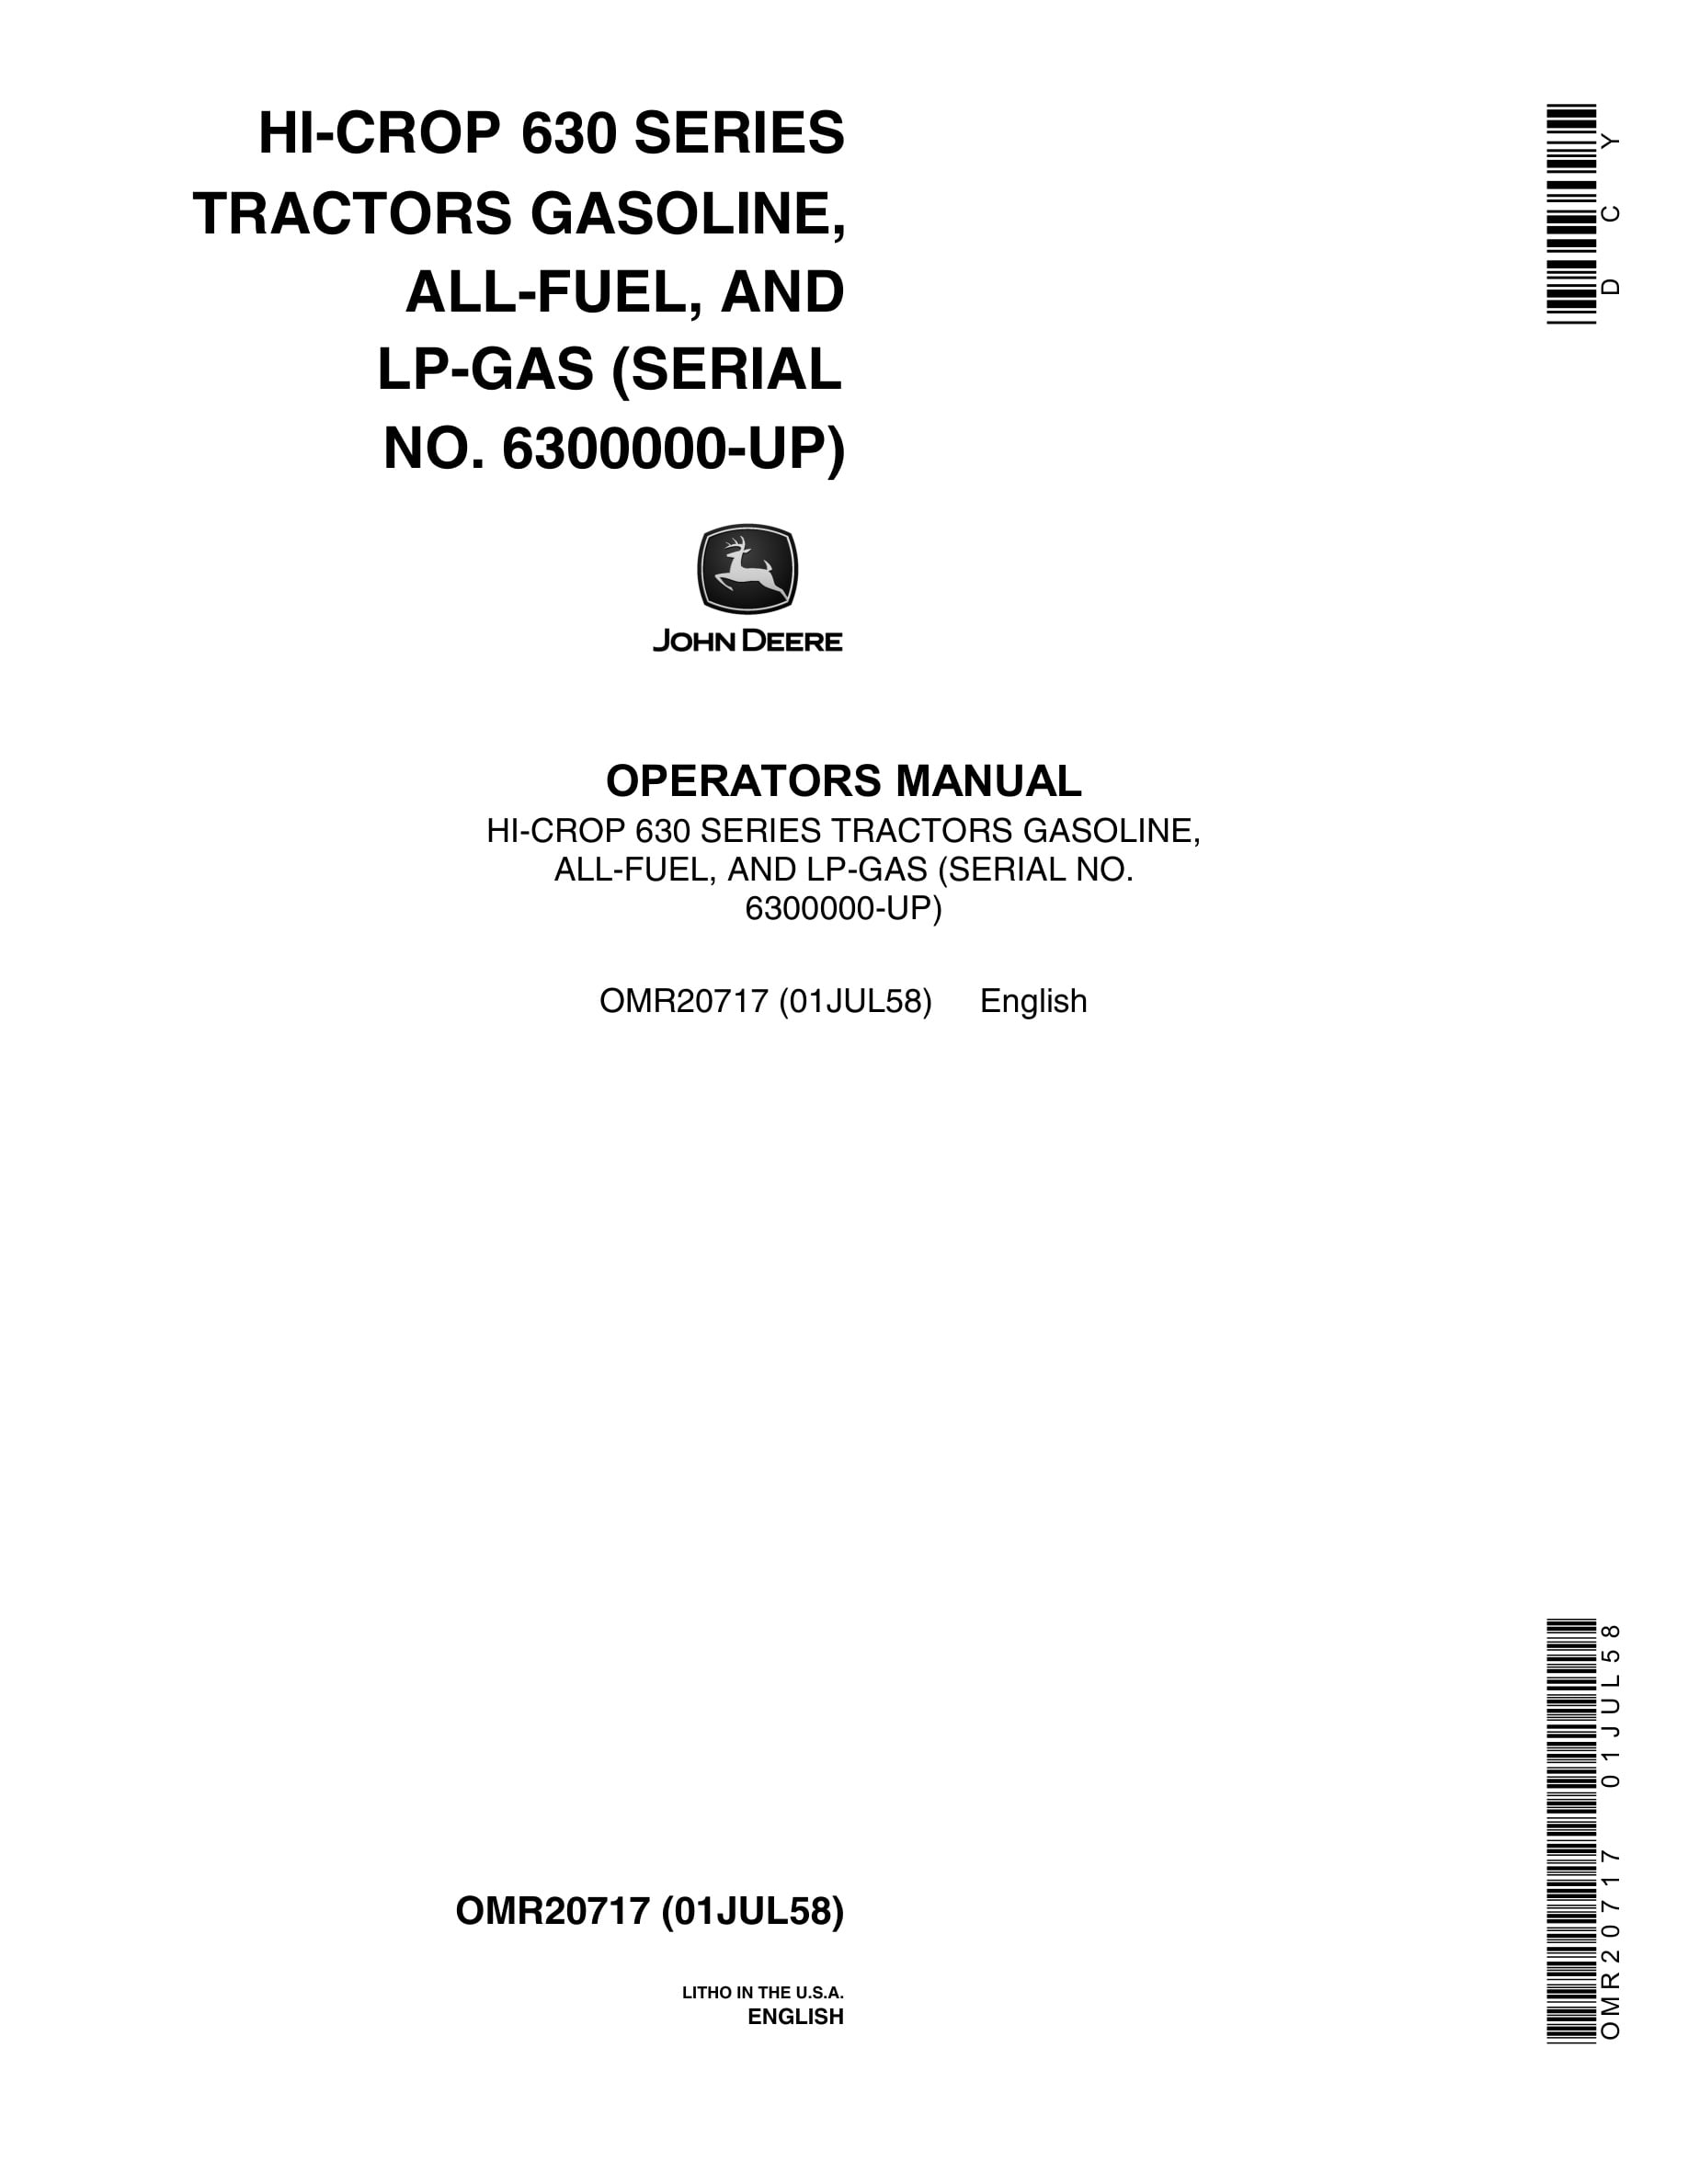 John Deere Hi-crop 630 Series Tractors Gasoline, All-fuel, And Lp-gas Operator Manual OMR2071-1